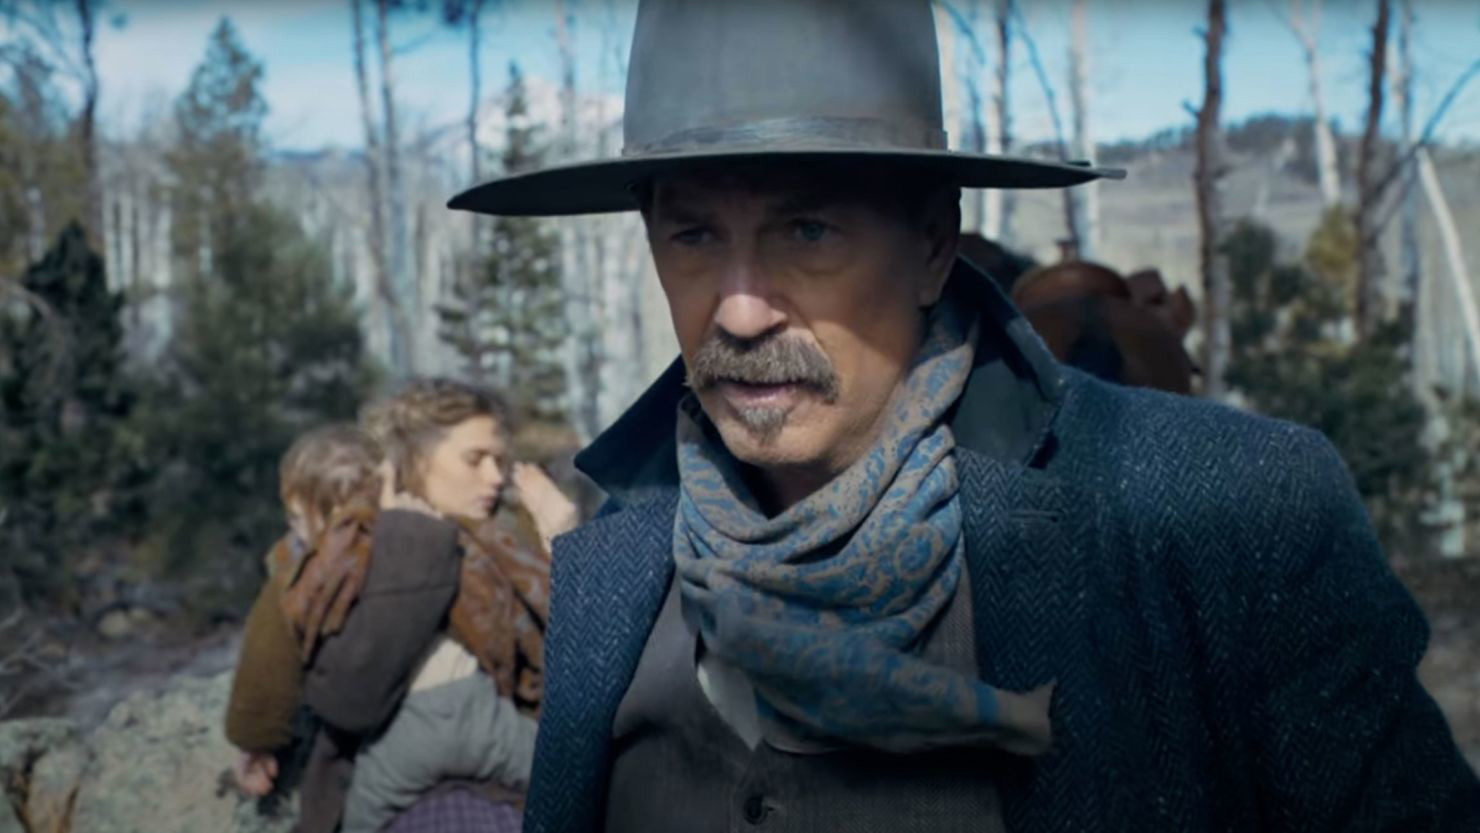 Kevin Costner in a shot from Horizon: An American Saga trailer